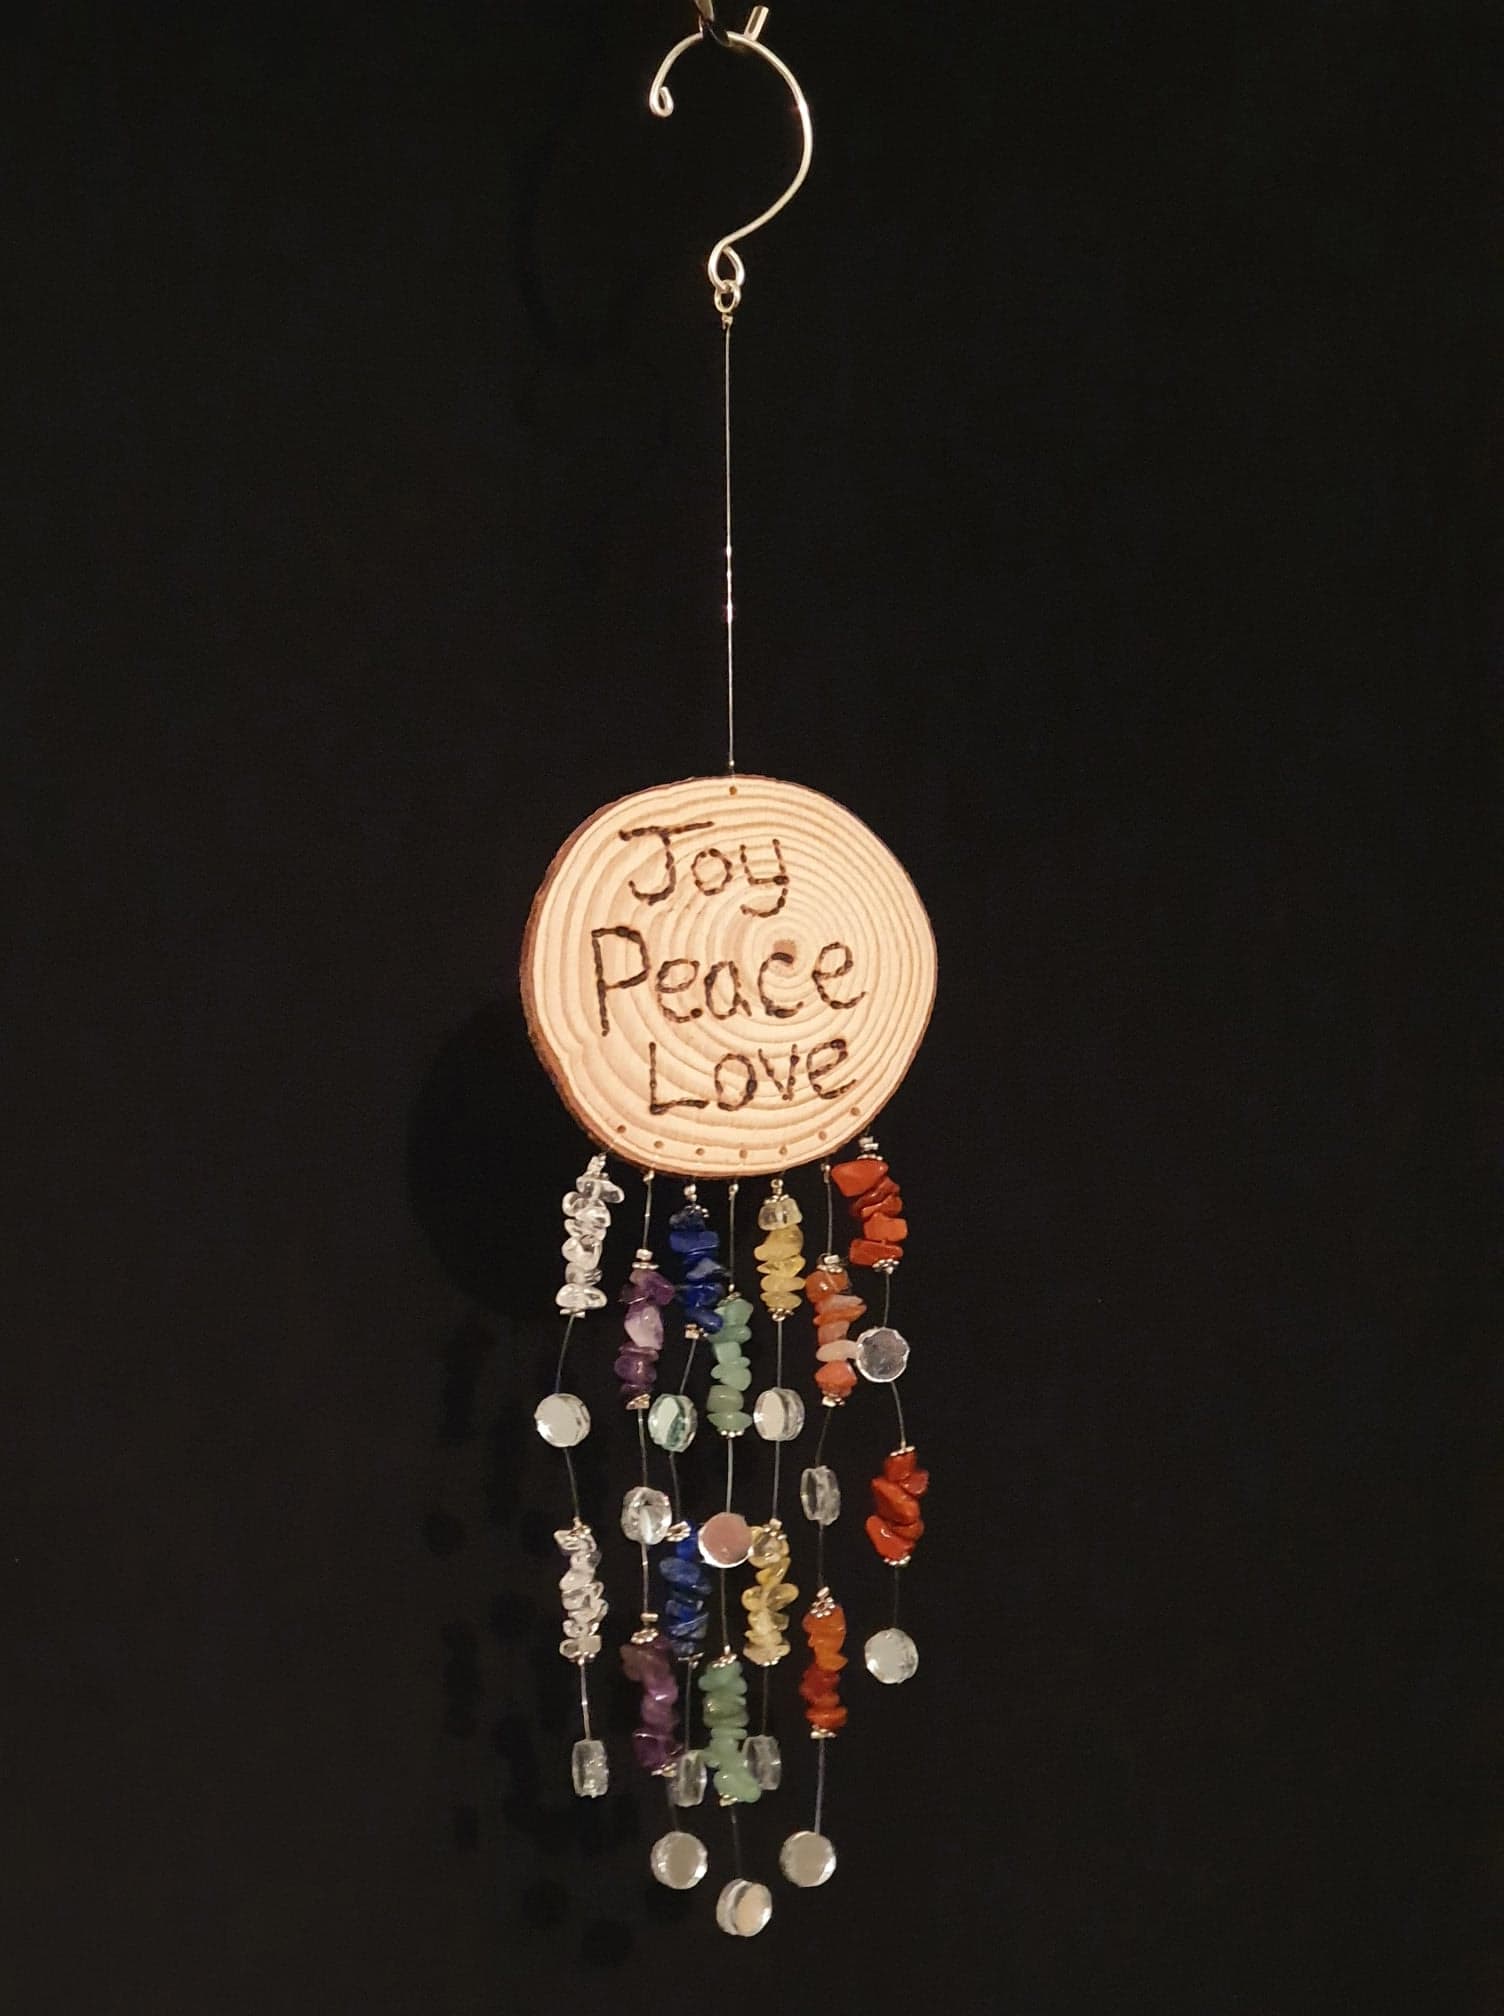 'Rustic Charm' 'JOY PEACE LOVE' chakra crystals decorative hanger